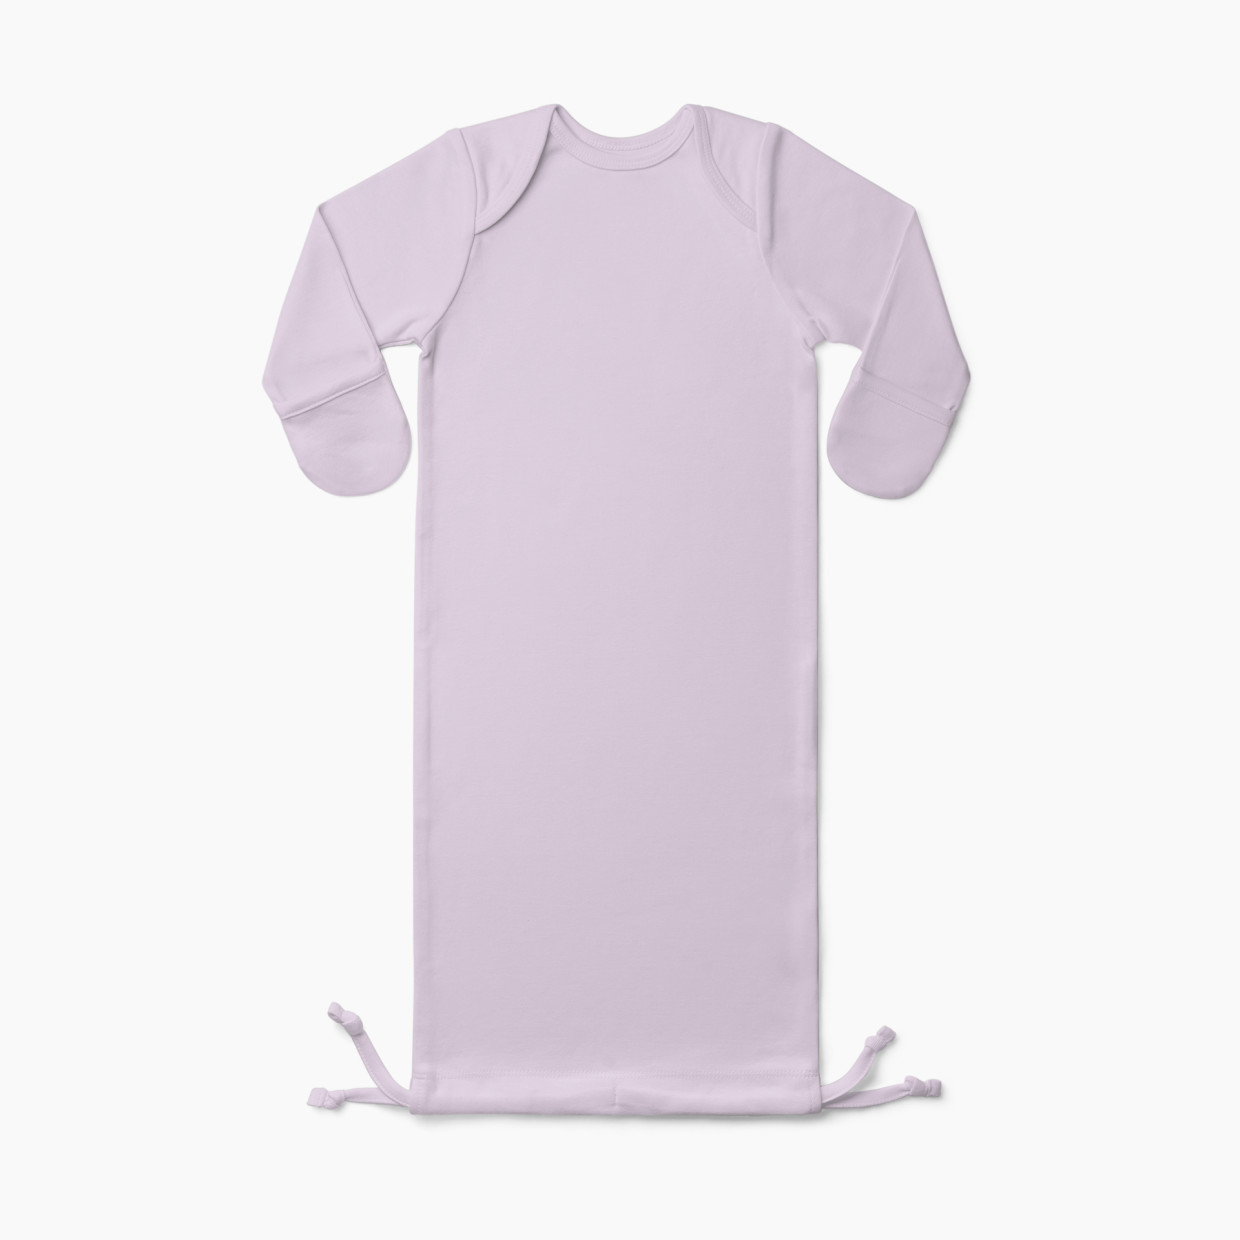 Goumi Kids x Babylist Drawstring Baby Gown - Lilac, 0-3 Months.